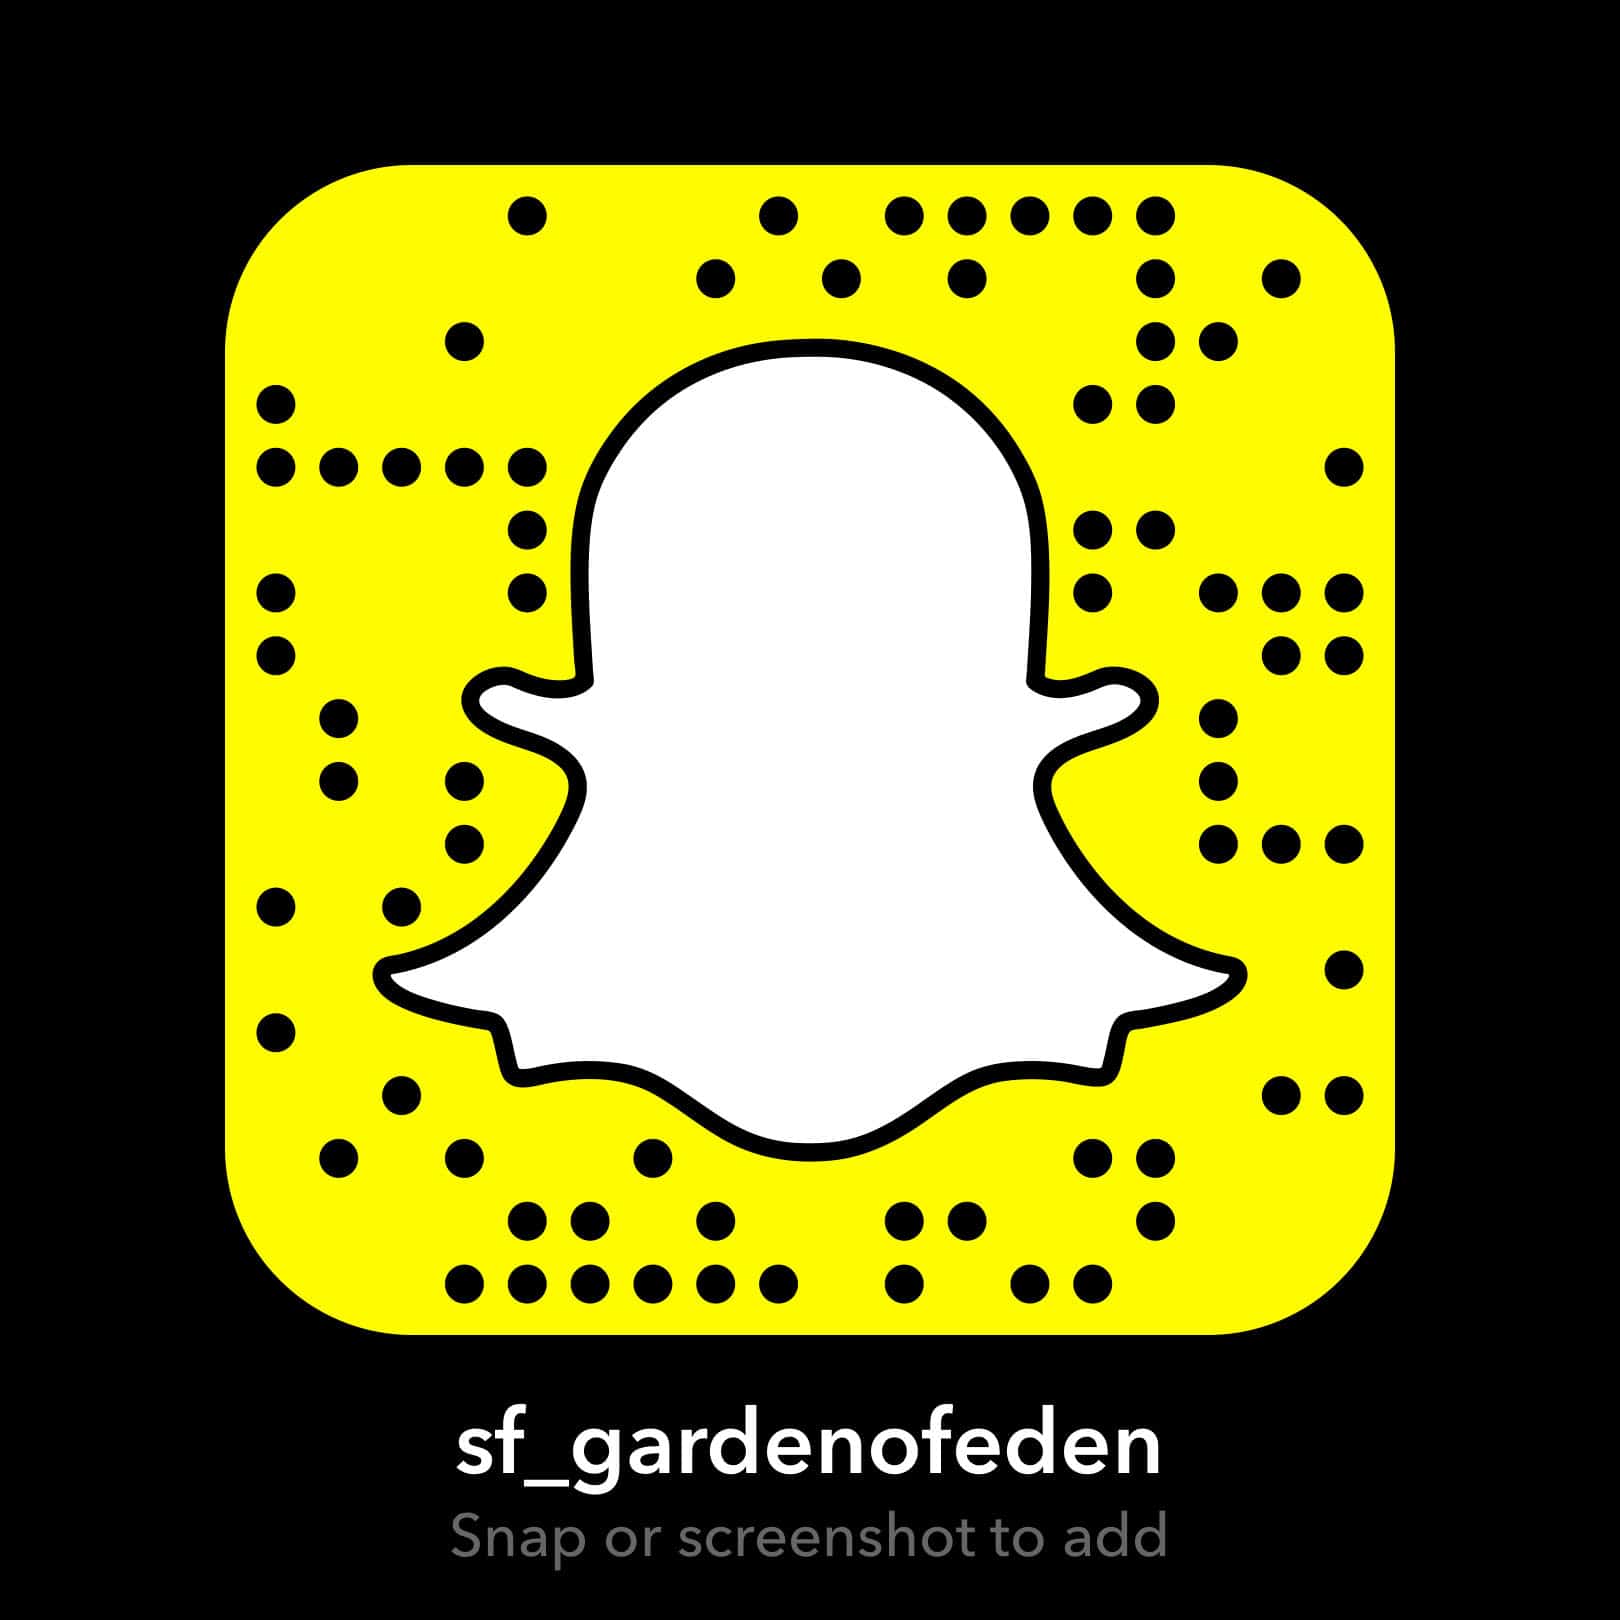 Snapchat: sf_gardenofeden